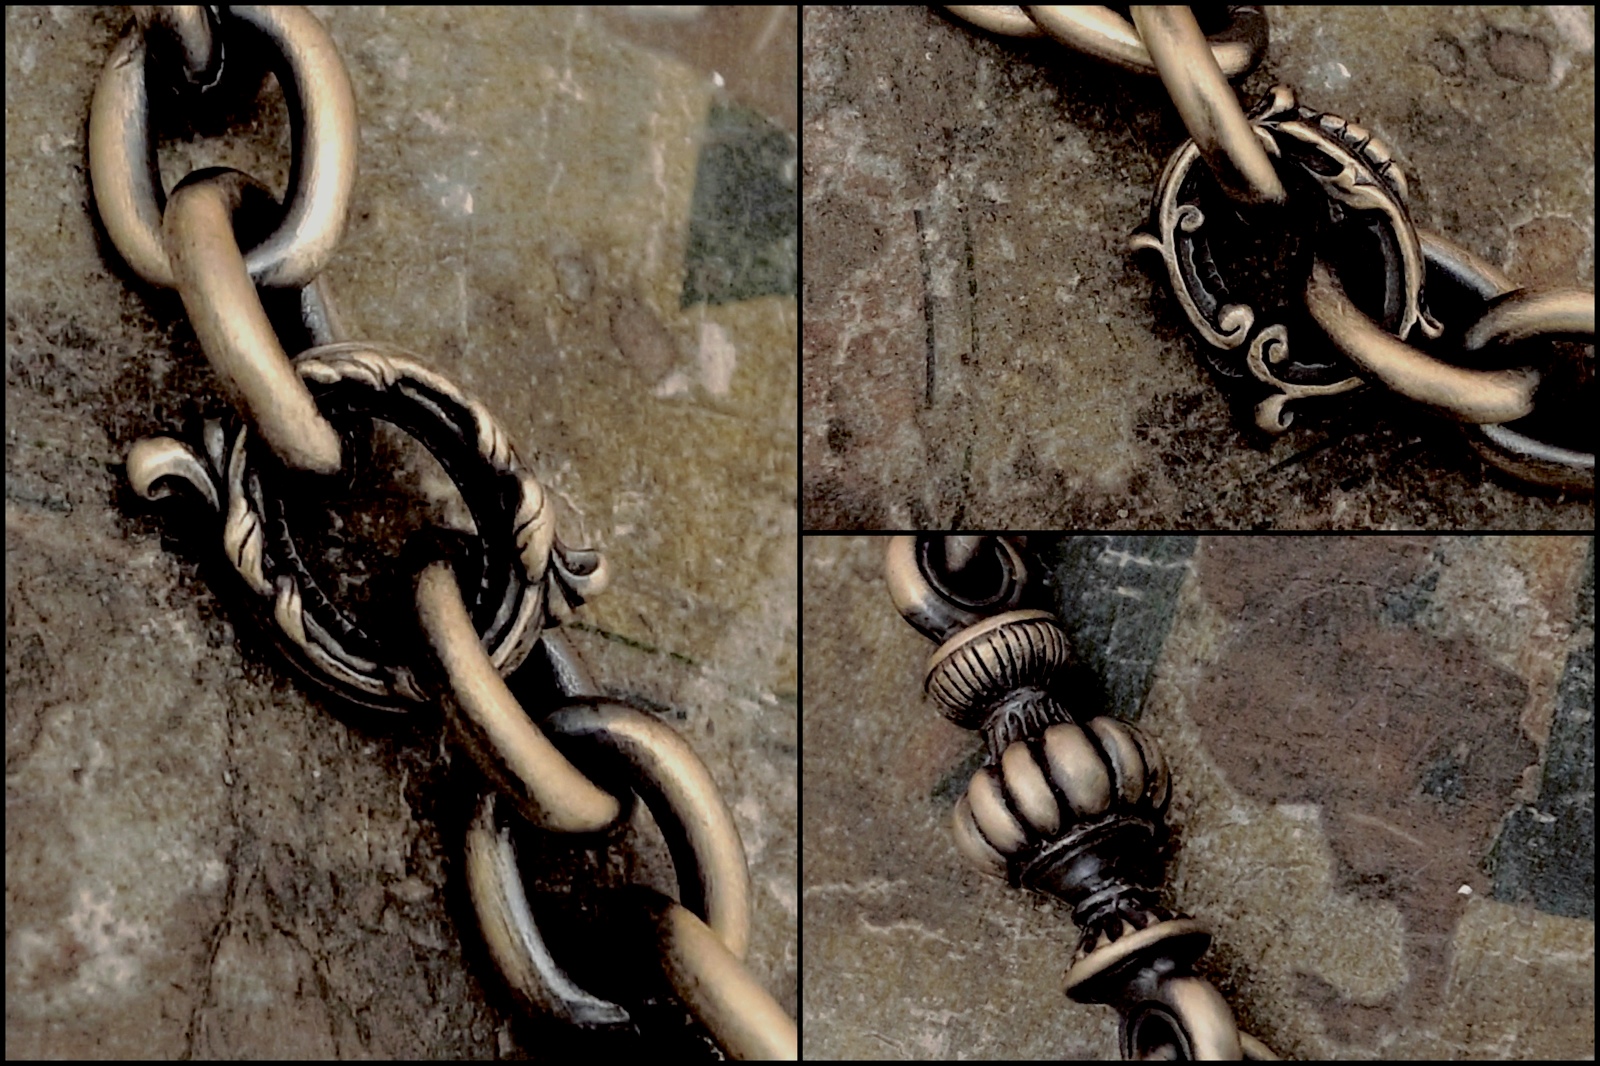 Pointパーツは全3種類【Rococo Mantel Brass Chain Bracelet "Point"】